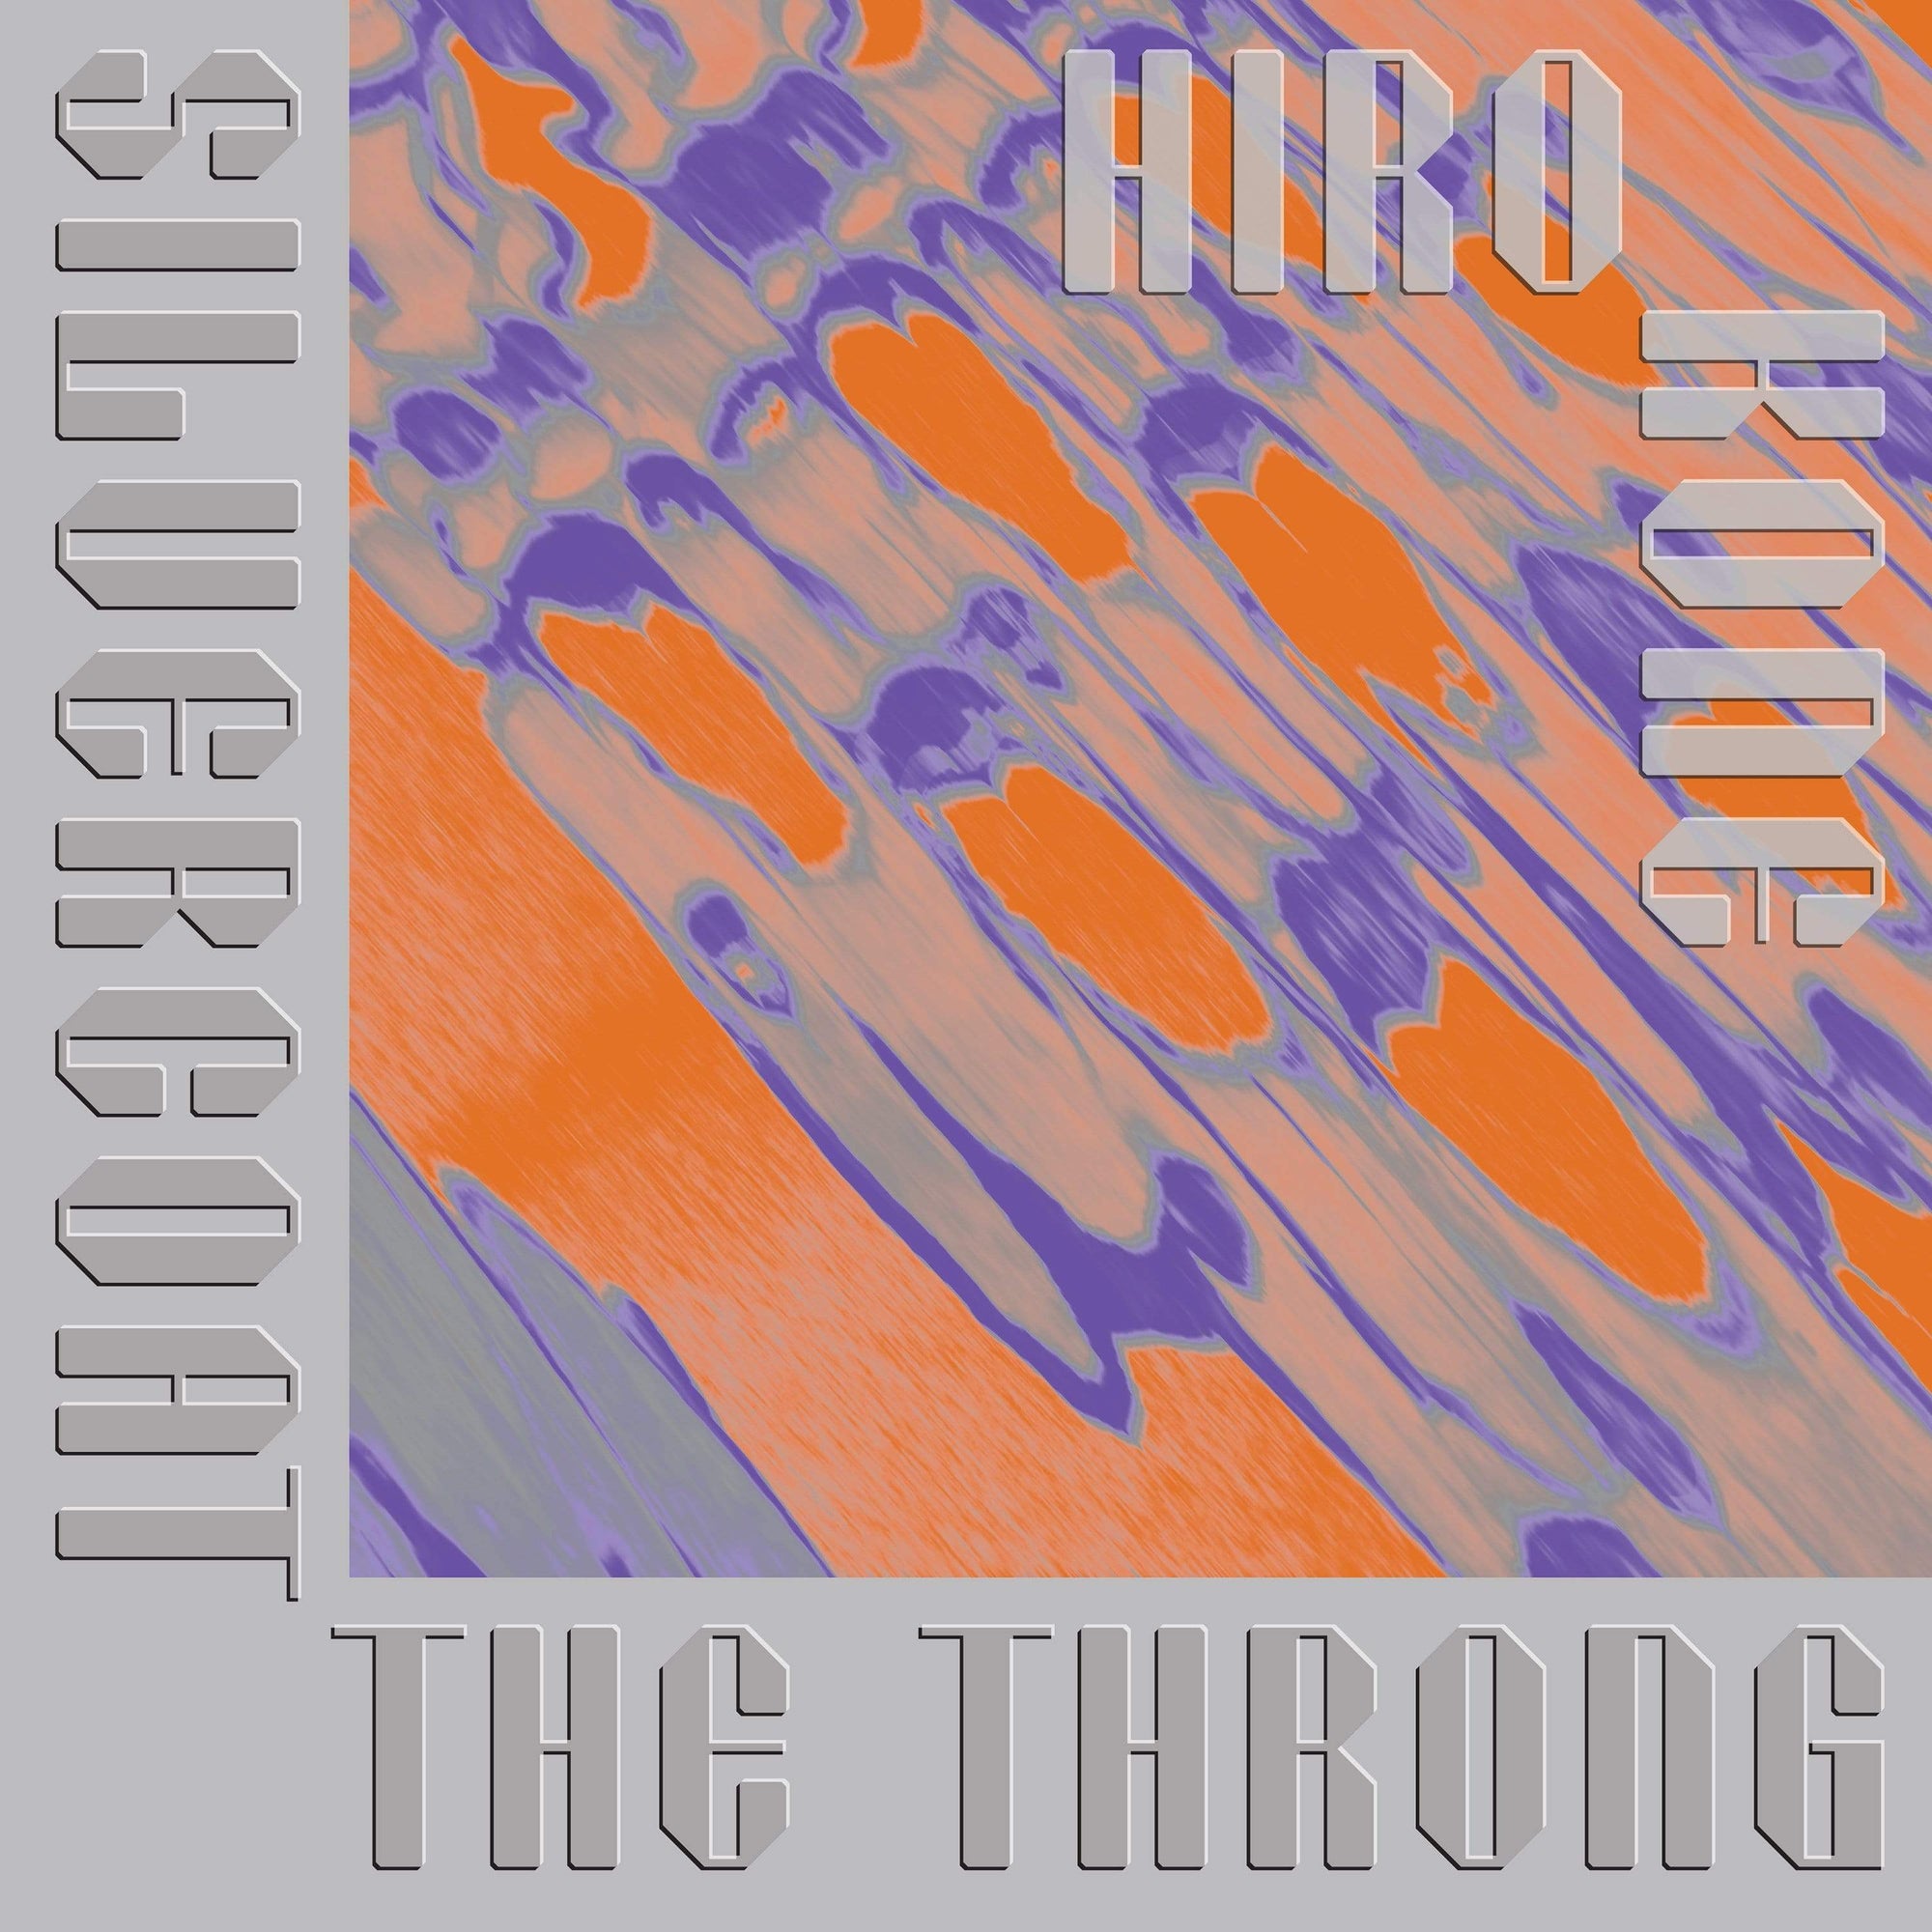 Dais Vinyl Hiro Kone "Silvercoat the Throng" LP